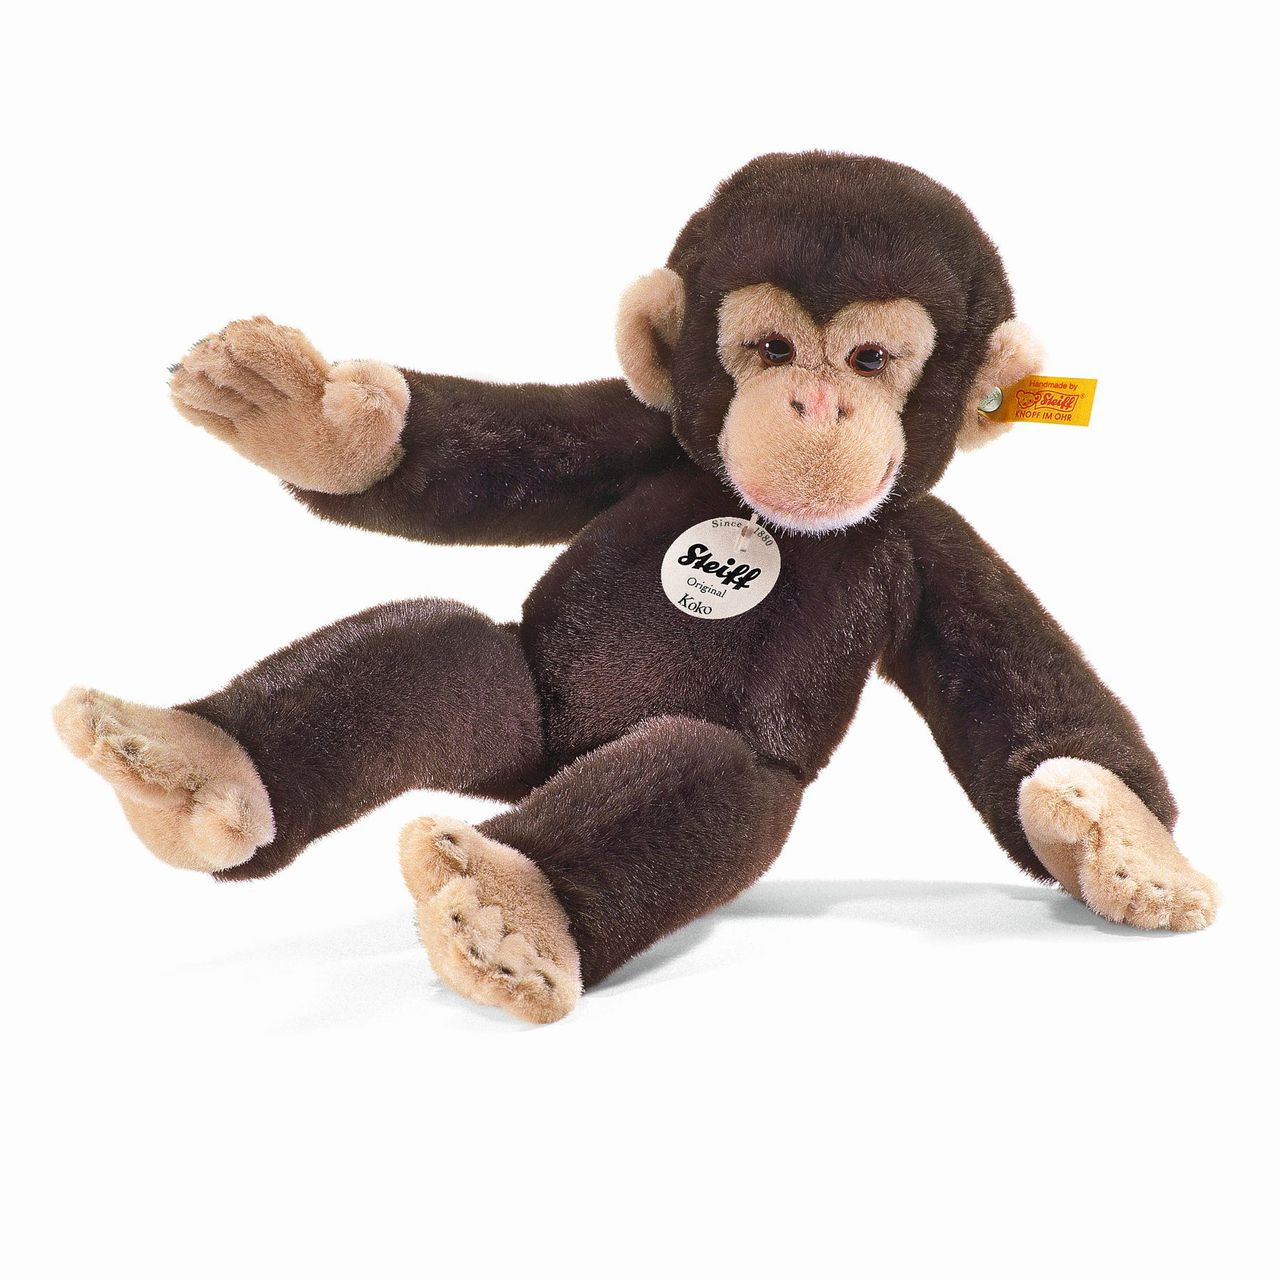 chimp stuffed animal